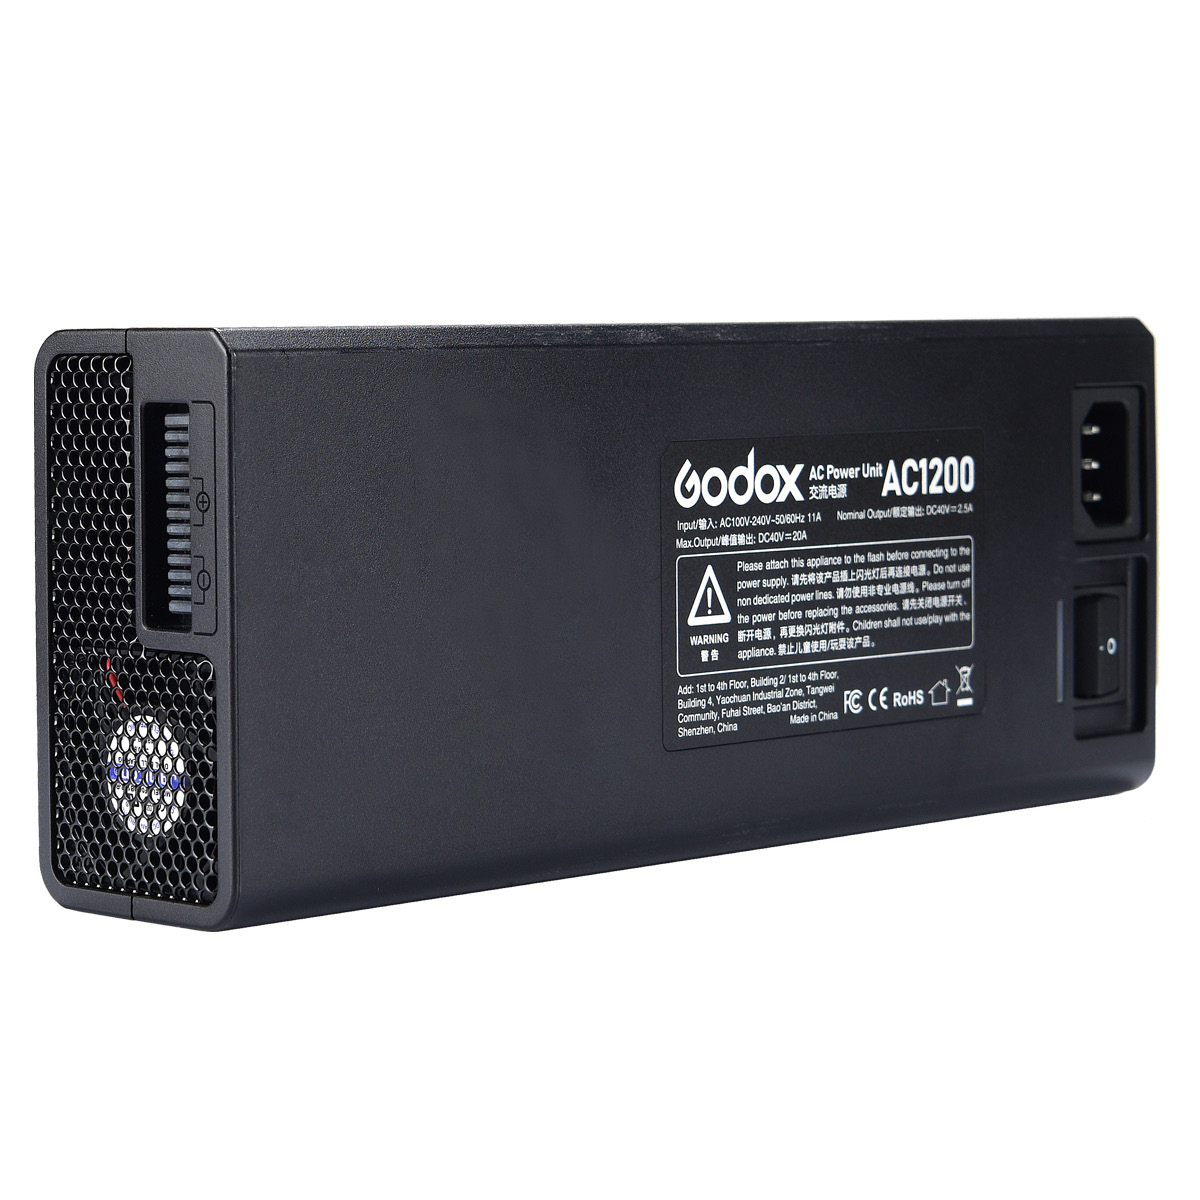 Godox AC 1200 Netzadapter für AD 1200 Pro